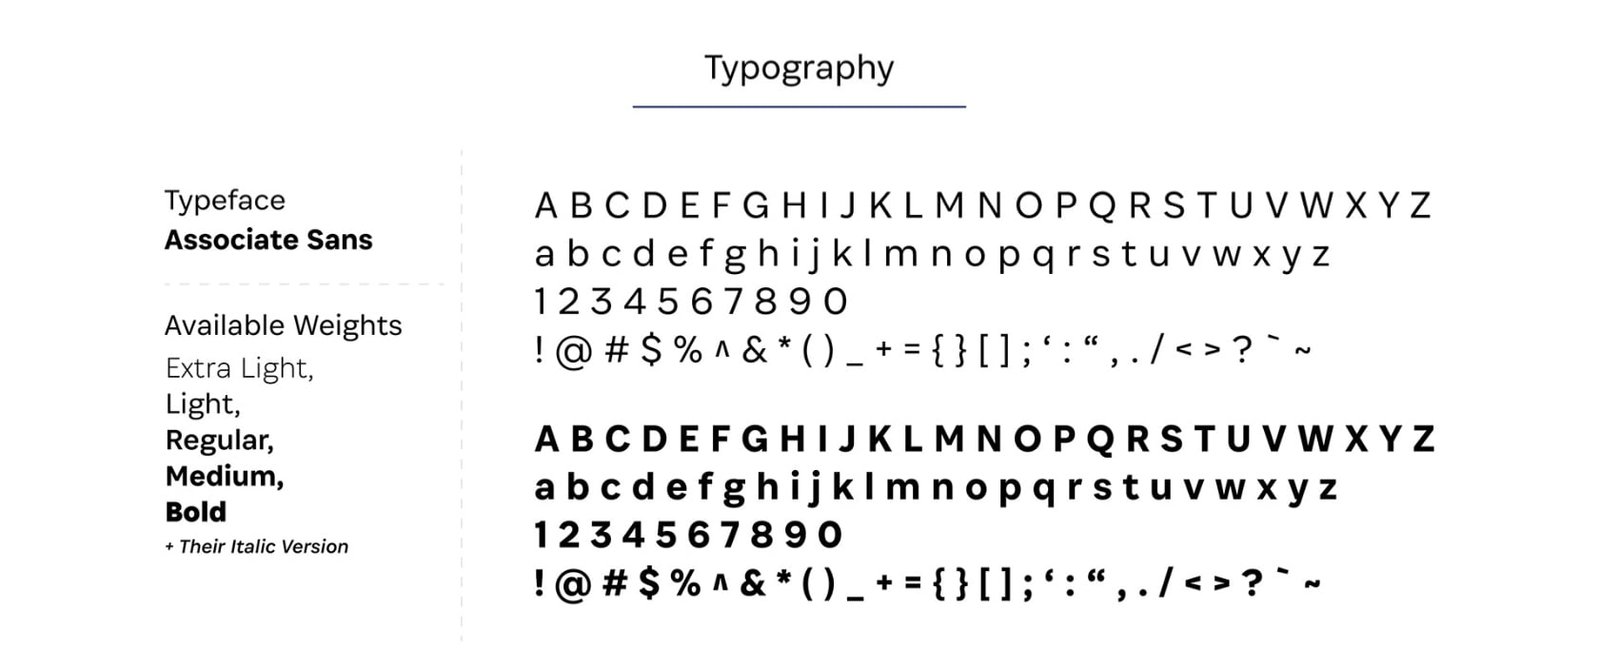 Typography in Branding System